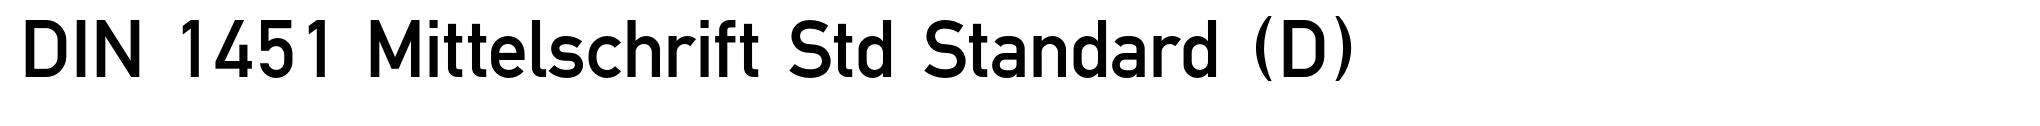 DIN 1451 Mittelschrift Std Standard (D) image